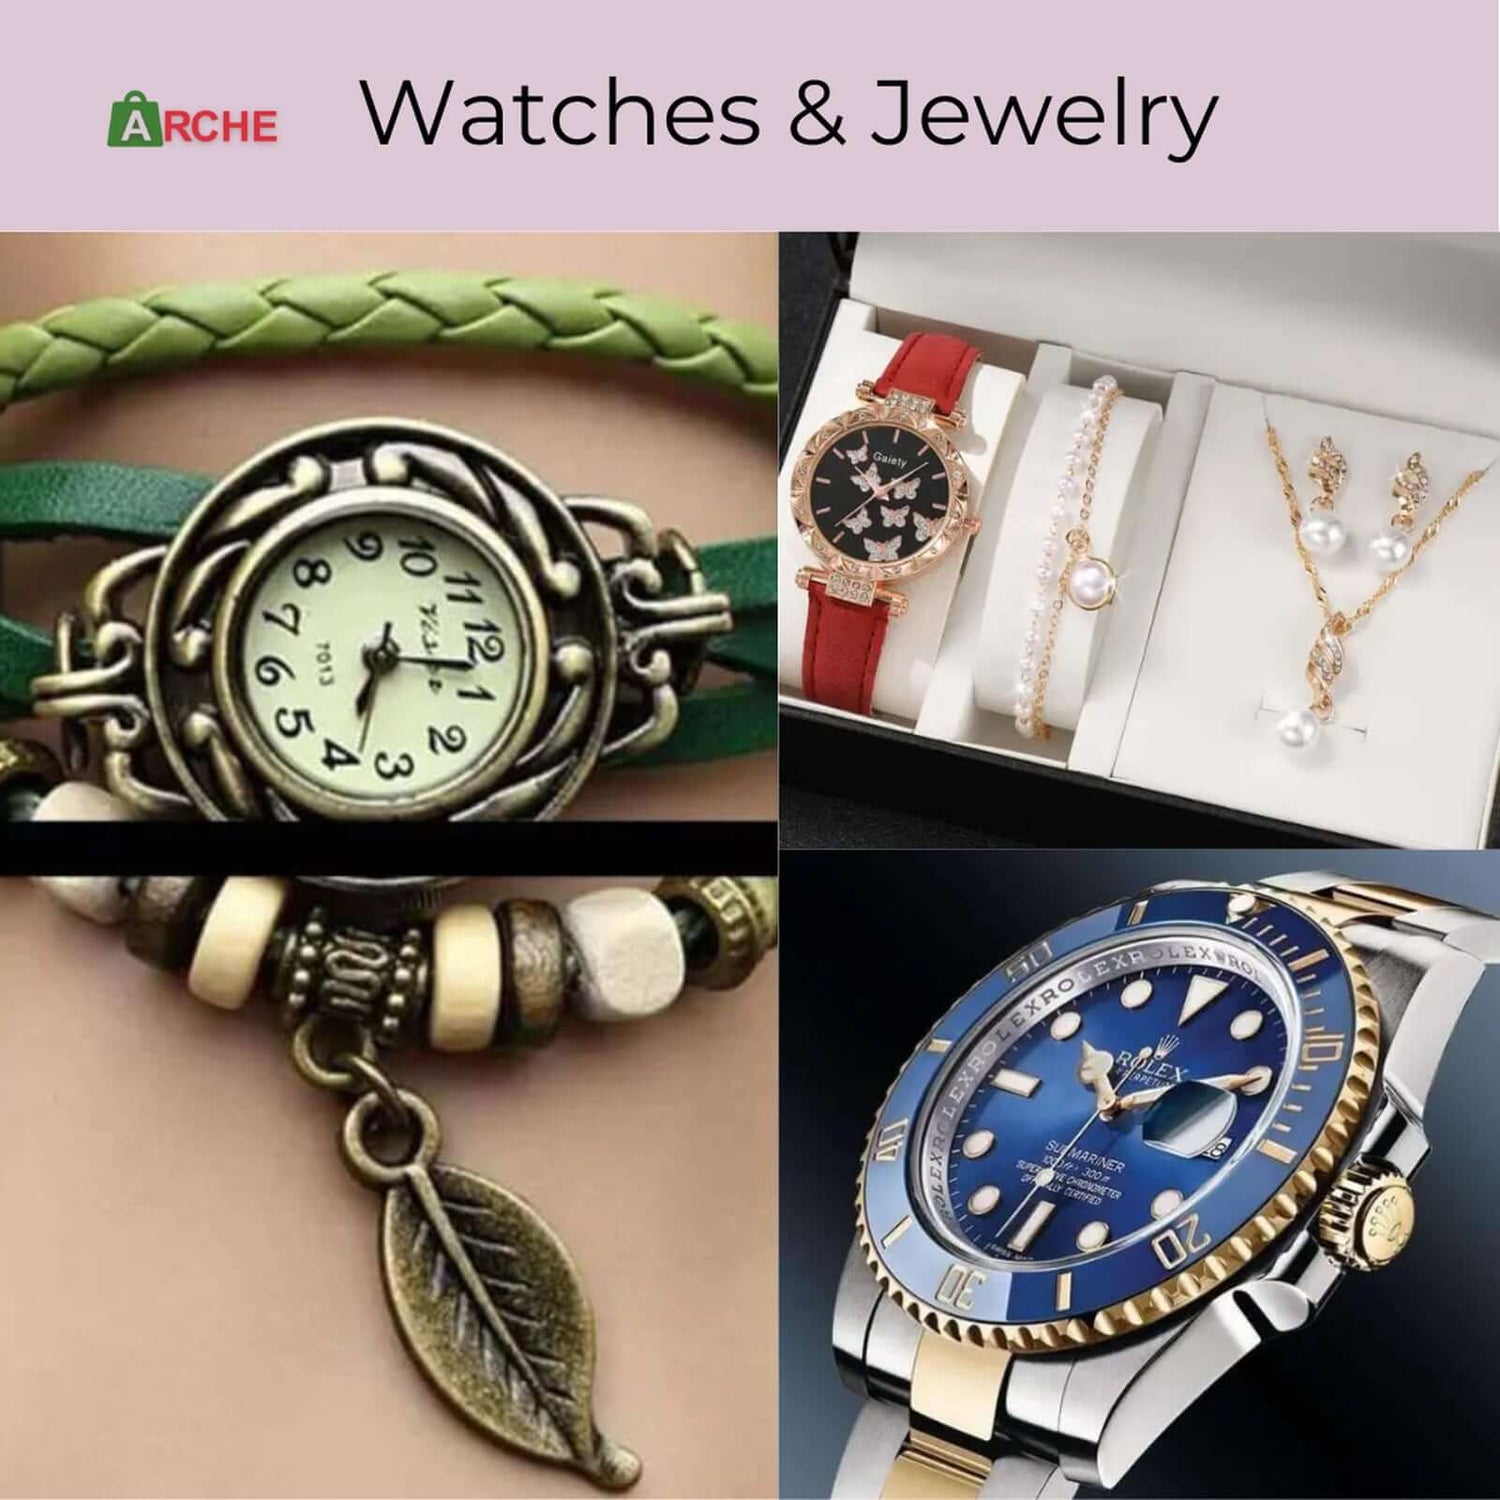 Watches & Jewelry - ARCHE